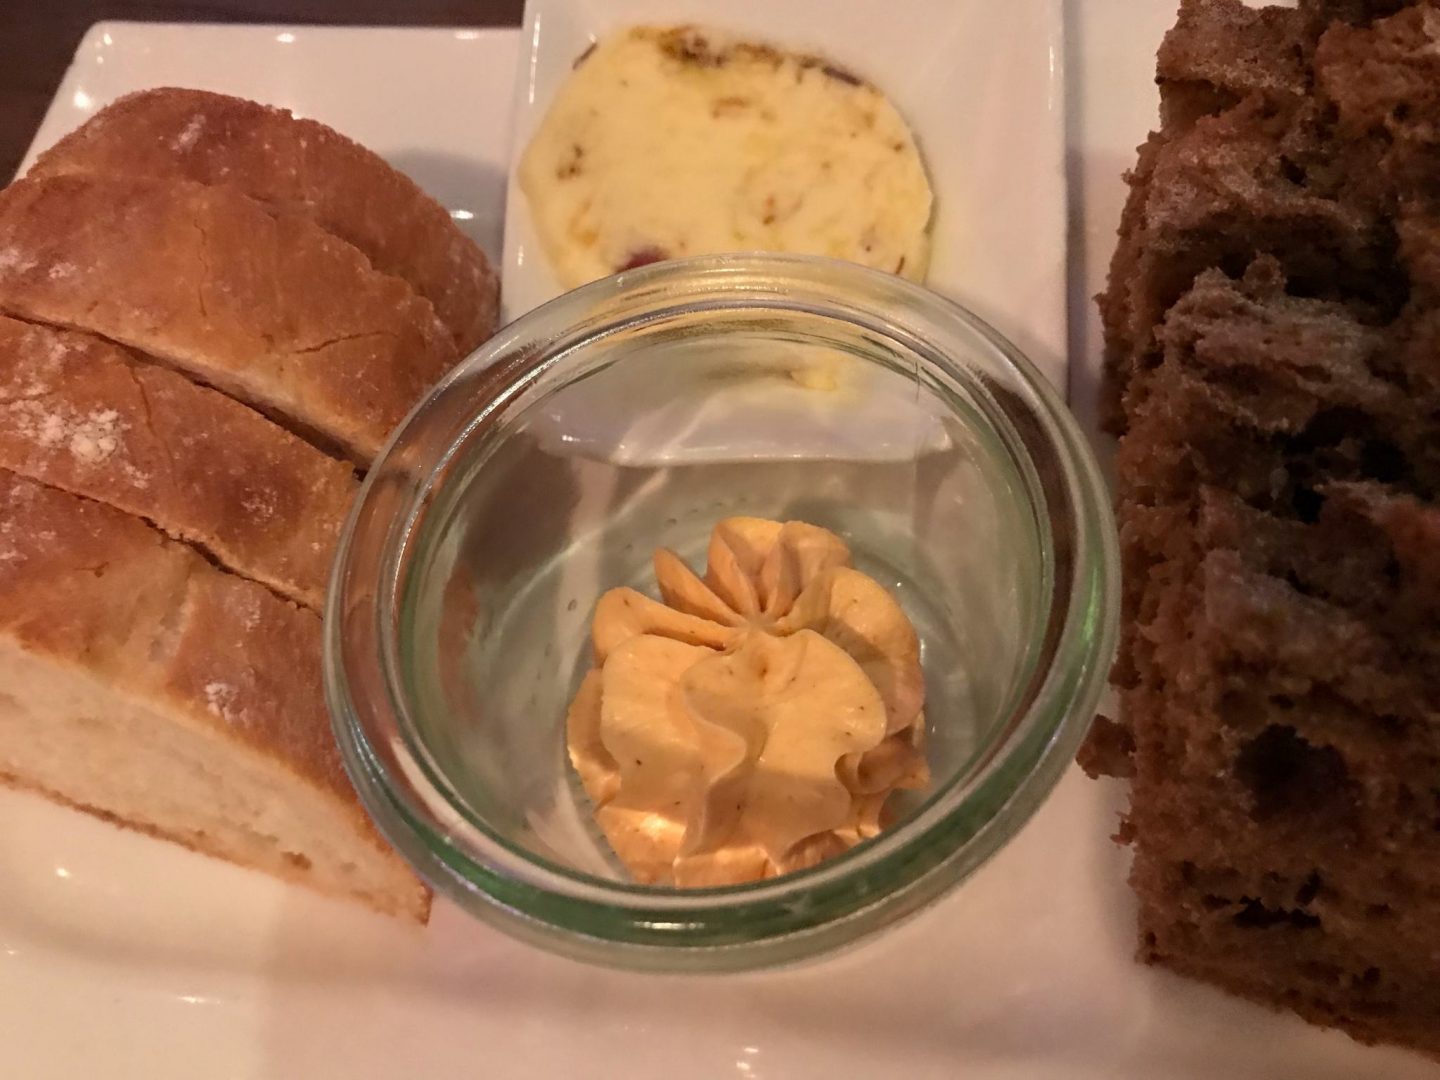 Menükarussell Brot Butter Tandoricreme Erfahrung Vesttafel Recklinghausen Foodblog Sternestulle